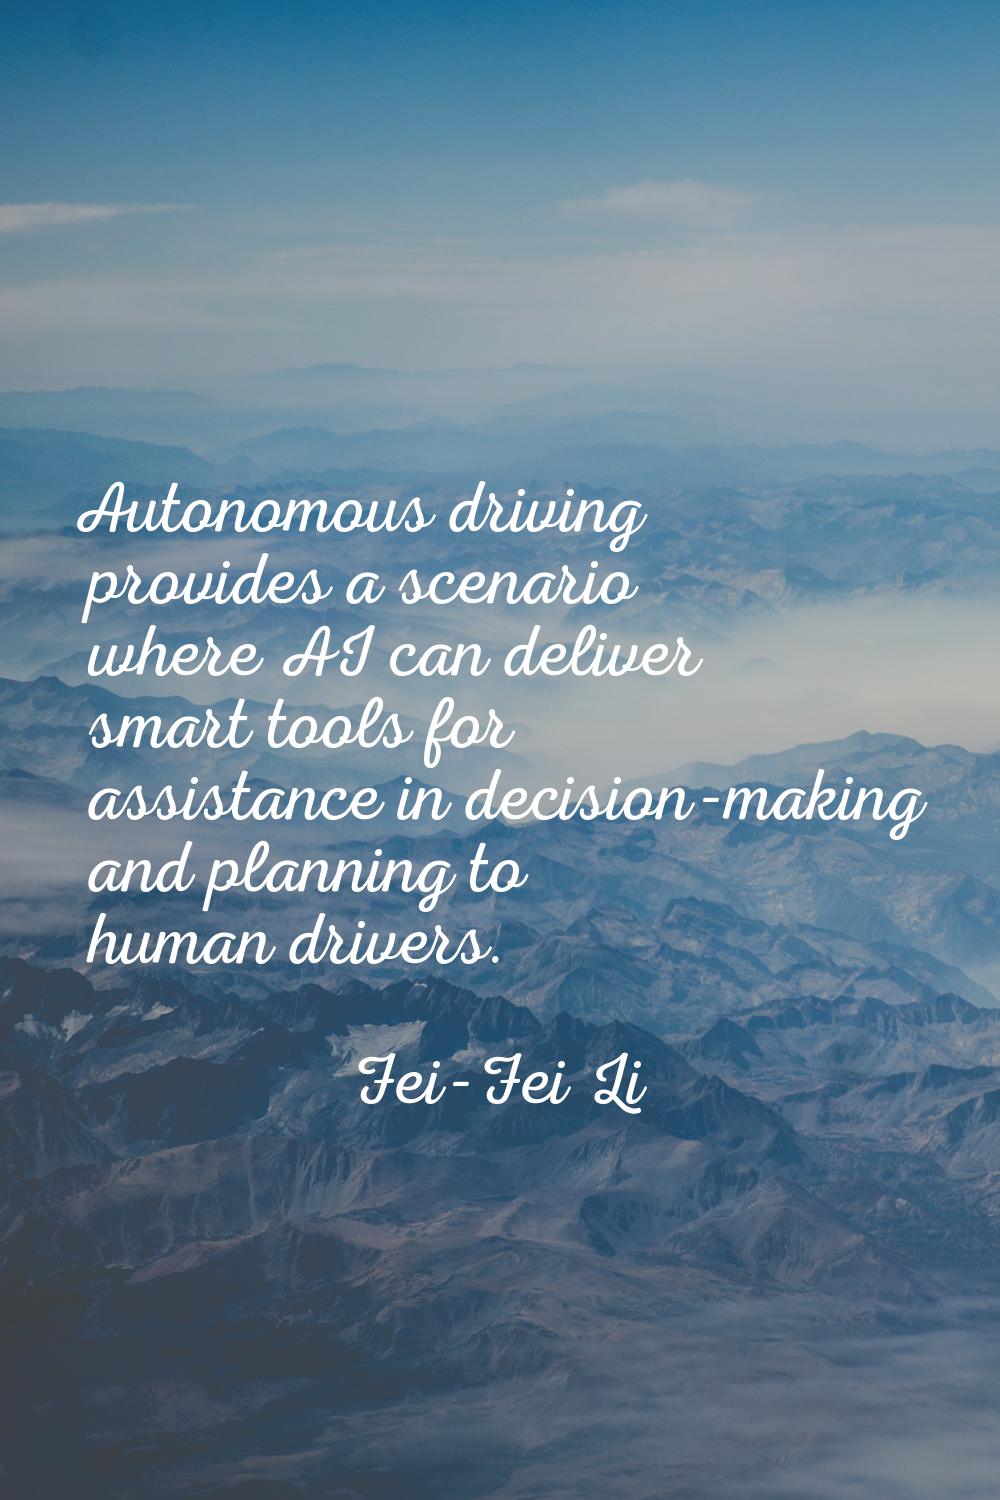 Autonomous driving provides a scenario where AI can deliver smart tools for assistance in decision-